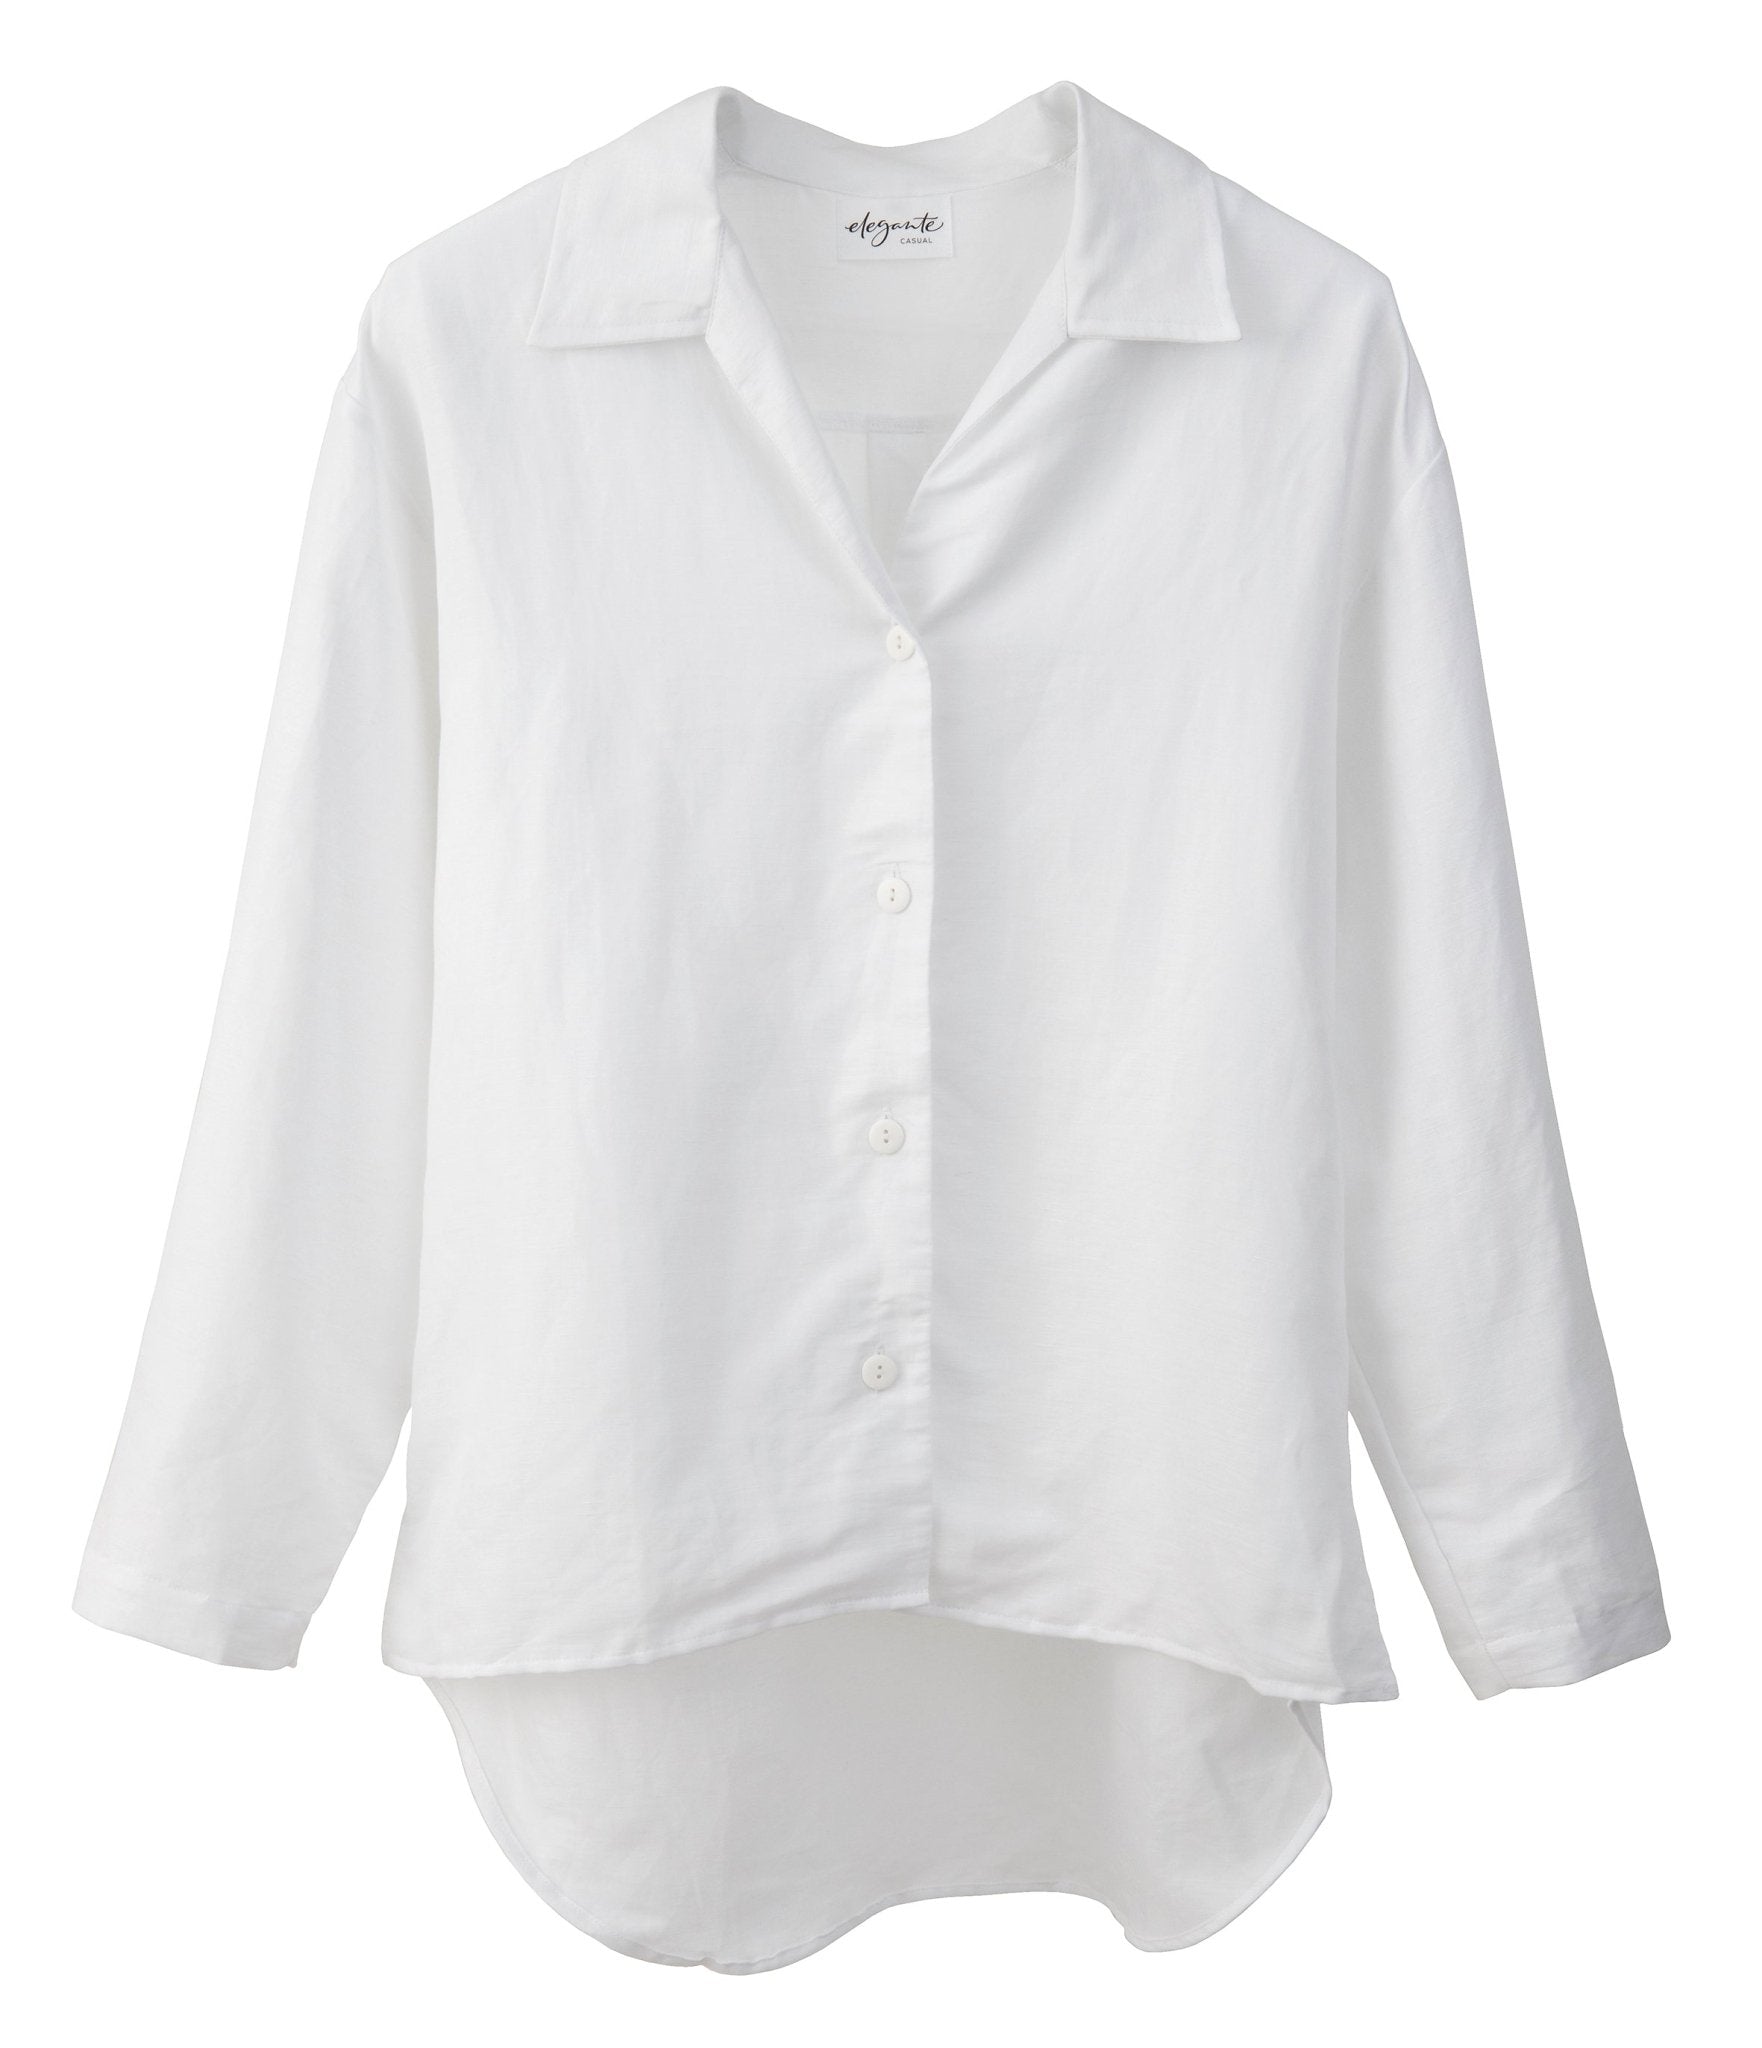 Halbleinen Homewear PJ Shirt in Weiß Model Freisteller